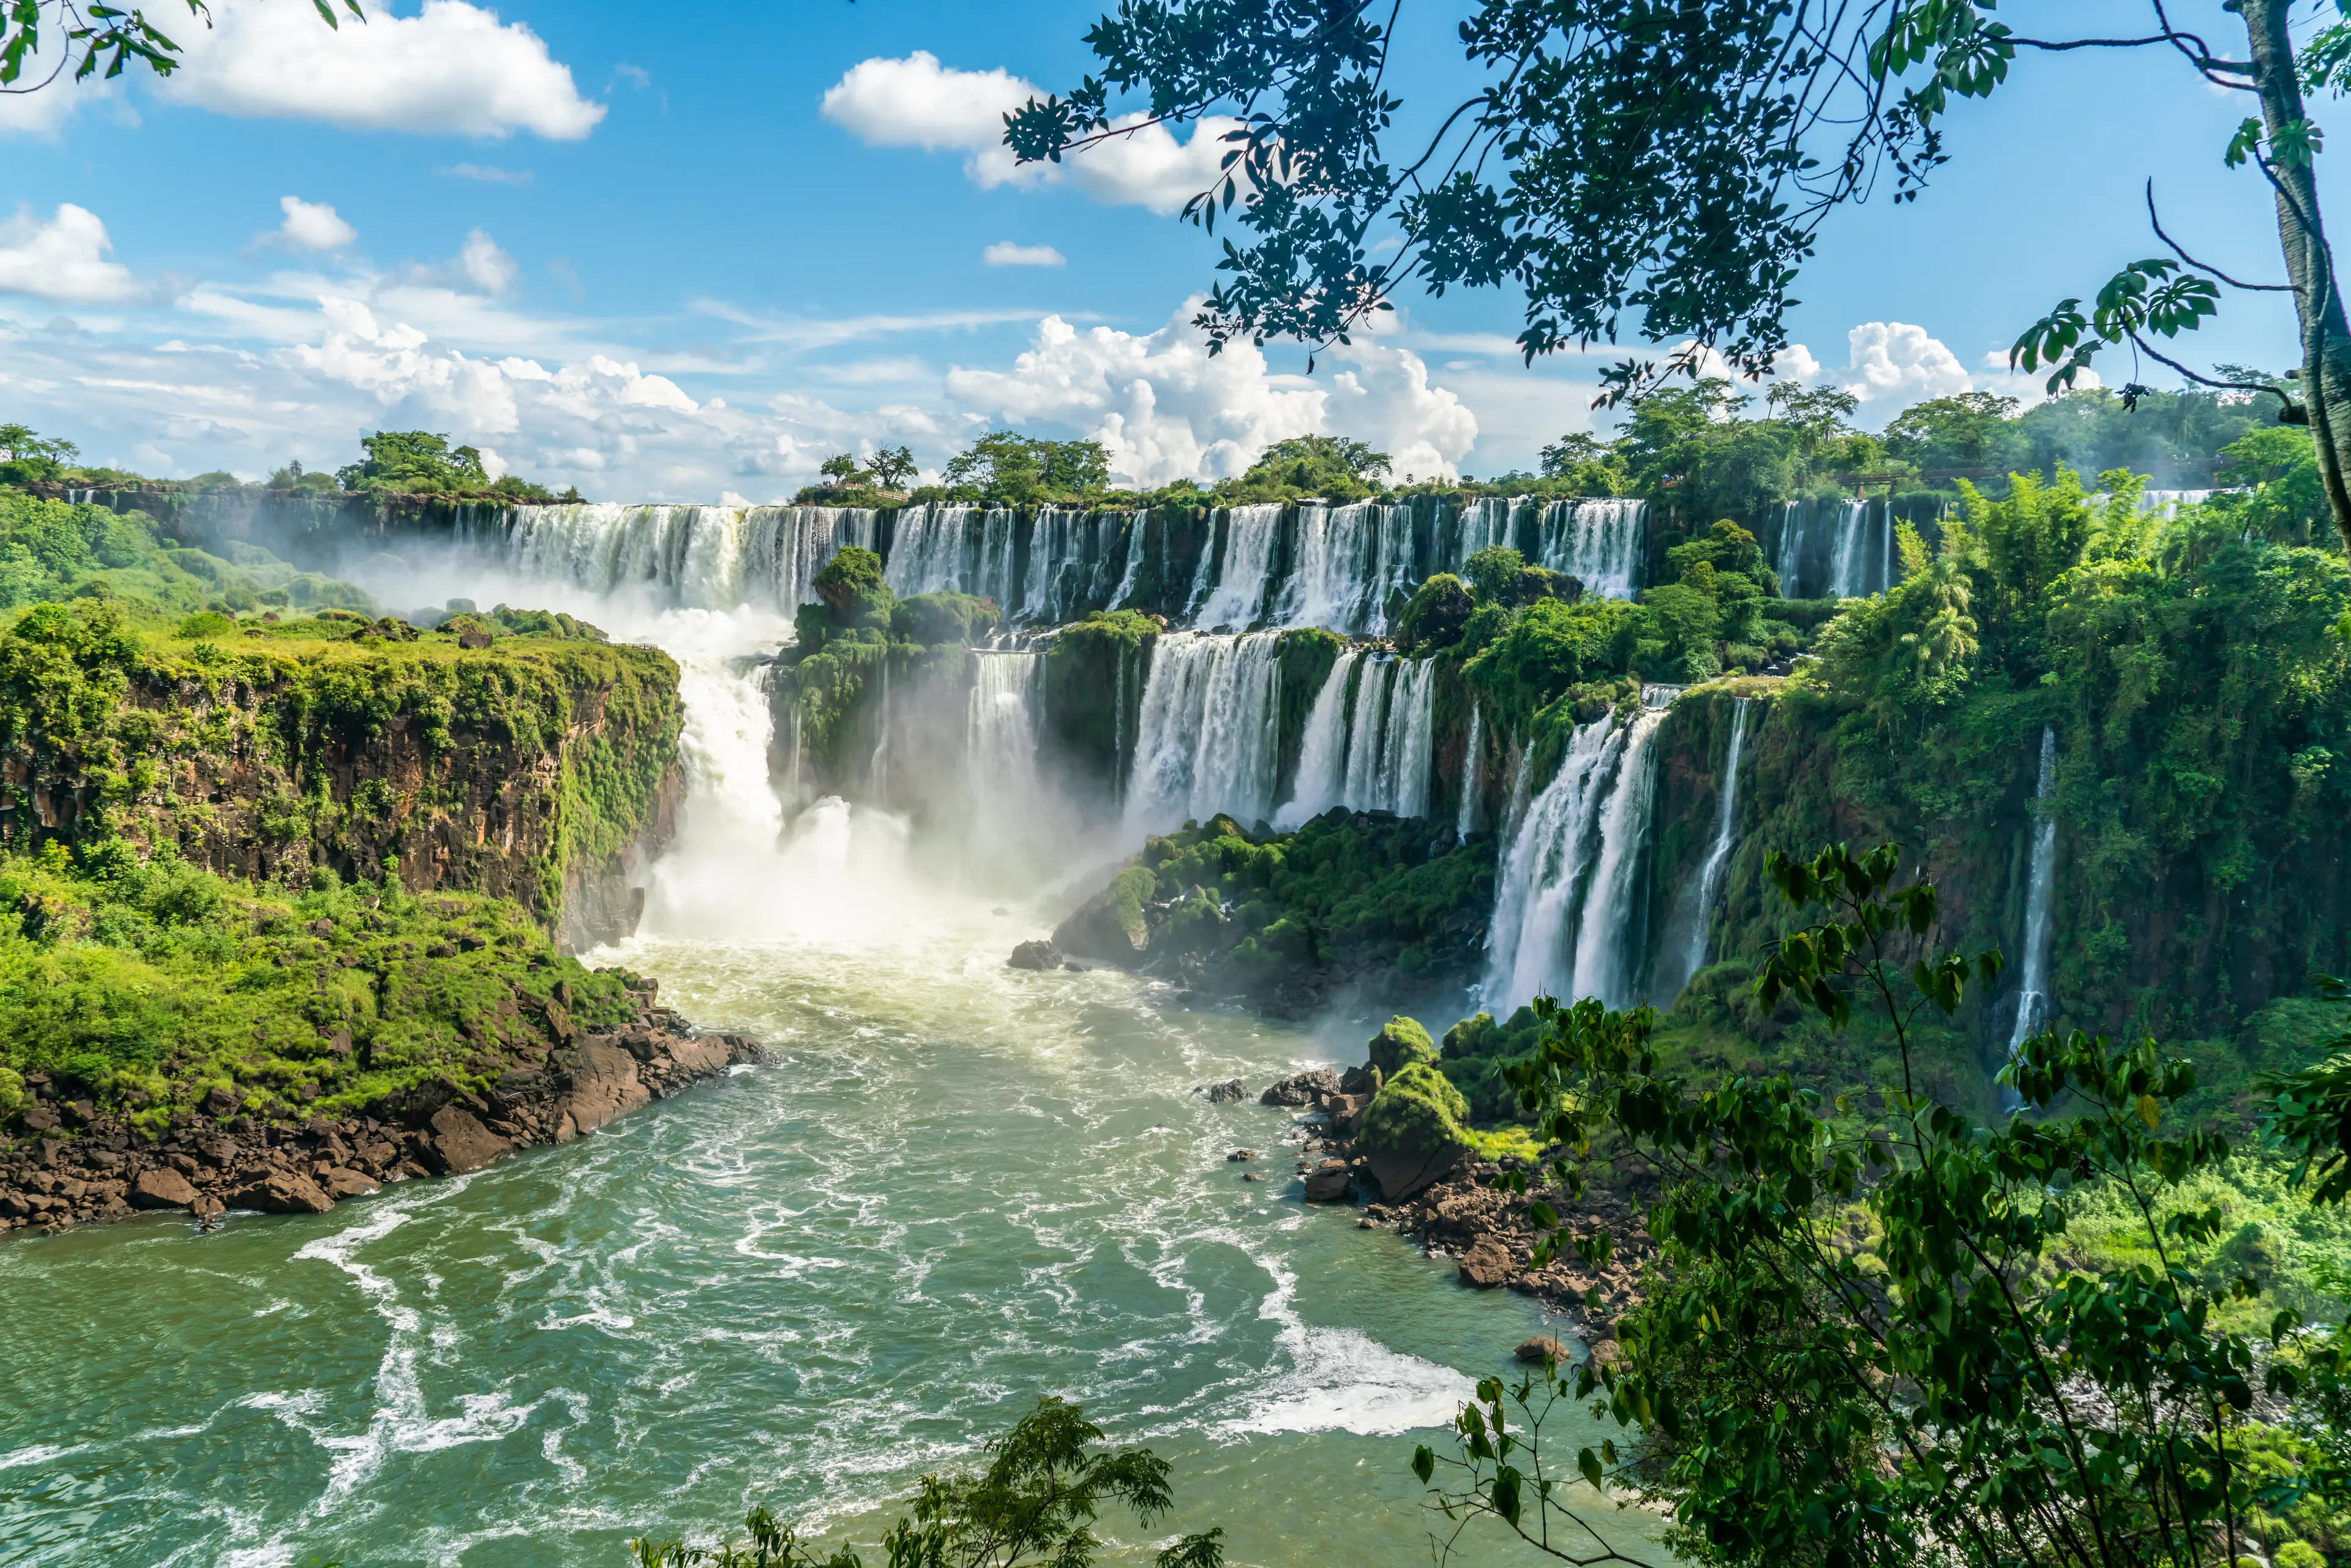 1-Day Sightseeing Adventure at Iguazu Falls, Brazil